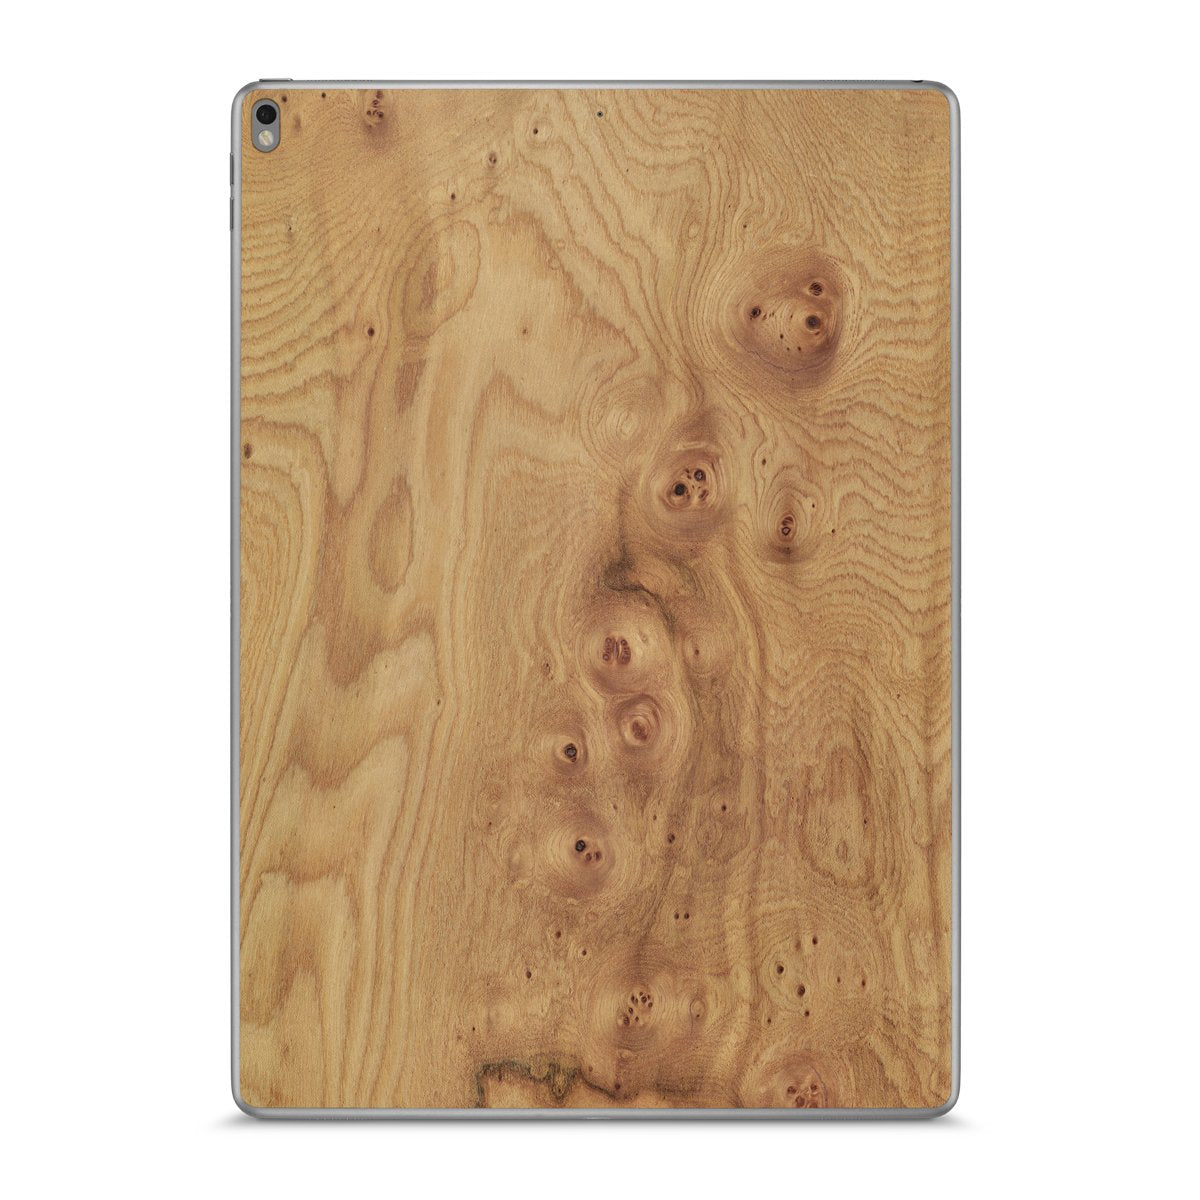 iPad Pro 12.9-inch (3rd Gen) — #WoodBack Skin